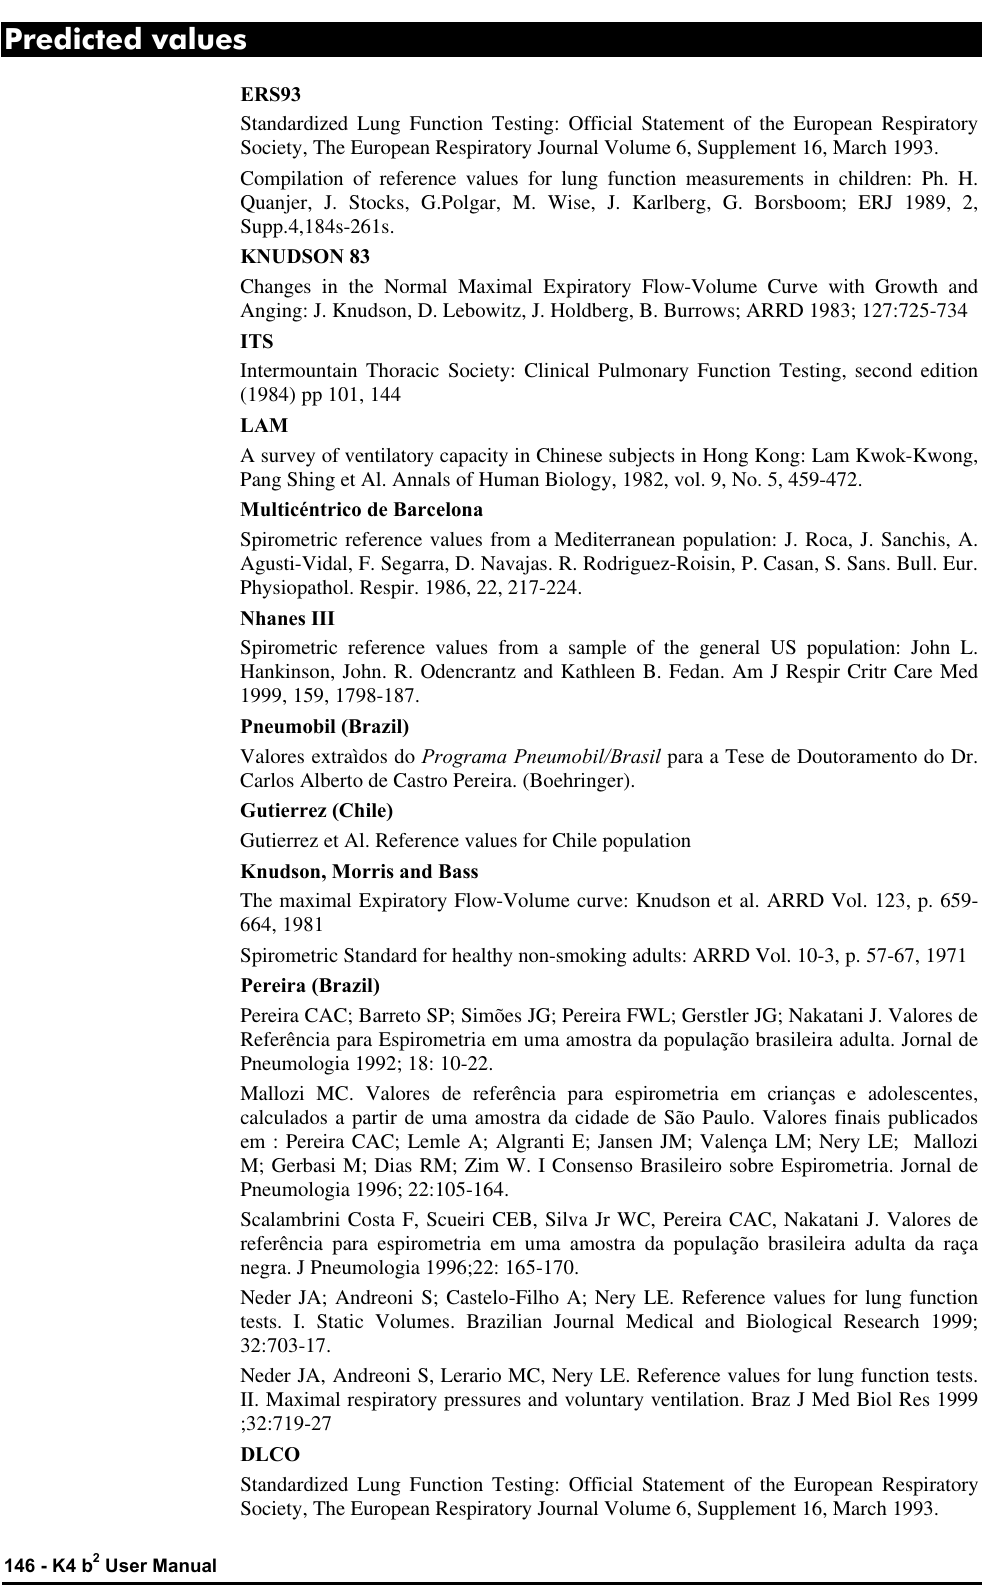  146 - K4 b2 User Manual Predicted values ERS93 Standardized Lung Function Testing: Official Statement of the European Respiratory Society, The European Respiratory Journal Volume 6, Supplement 16, March 1993. Compilation of reference values for lung function measurements in children: Ph. H. Quanjer, J. Stocks, G.Polgar, M. Wise, J. Karlberg, G. Borsboom; ERJ 1989, 2, Supp.4,184s-261s. KNUDSON 83 Changes in the Normal Maximal Expiratory Flow-Volume Curve with Growth and Anging: J. Knudson, D. Lebowitz, J. Holdberg, B. Burrows; ARRD 1983; 127:725-734 ITS Intermountain Thoracic Society: Clinical Pulmonary Function Testing, second edition (1984) pp 101, 144 LAM A survey of ventilatory capacity in Chinese subjects in Hong Kong: Lam Kwok-Kwong, Pang Shing et Al. Annals of Human Biology, 1982, vol. 9, No. 5, 459-472. Multicéntrico de Barcelona Spirometric reference values from a Mediterranean population: J. Roca, J. Sanchis, A. Agusti-Vidal, F. Segarra, D. Navajas. R. Rodriguez-Roisin, P. Casan, S. Sans. Bull. Eur. Physiopathol. Respir. 1986, 22, 217-224. Nhanes III Spirometric reference values from a sample of the general US population: John L. Hankinson, John. R. Odencrantz and Kathleen B. Fedan. Am J Respir Critr Care Med 1999, 159, 1798-187. Pneumobil (Brazil) Valores extraìdos do Programa Pneumobil/Brasil para a Tese de Doutoramento do Dr. Carlos Alberto de Castro Pereira. (Boehringer). Gutierrez (Chile) Gutierrez et Al. Reference values for Chile population Knudson, Morris and Bass The maximal Expiratory Flow-Volume curve: Knudson et al. ARRD Vol. 123, p. 659-664, 1981 Spirometric Standard for healthy non-smoking adults: ARRD Vol. 10-3, p. 57-67, 1971 Pereira (Brazil) Pereira CAC; Barreto SP; Simões JG; Pereira FWL; Gerstler JG; Nakatani J. Valores de Referência para Espirometria em uma amostra da população brasileira adulta. Jornal de  Pneumologia 1992; 18: 10-22. Mallozi MC. Valores de referência para espirometria em crianças e adolescentes, calculados a partir de uma amostra da cidade de São Paulo. Valores finais publicados em : Pereira CAC; Lemle A; Algranti E; Jansen JM; Valença LM; Nery LE;  Mallozi M; Gerbasi M; Dias RM; Zim W. I Consenso Brasileiro sobre Espirometria. Jornal de Pneumologia 1996; 22:105-164. Scalambrini Costa F, Scueiri CEB, Silva Jr WC, Pereira CAC, Nakatani J. Valores de referência para espirometria em uma amostra da população brasileira adulta da raça negra. J Pneumologia 1996;22: 165-170. Neder JA; Andreoni S; Castelo-Filho A; Nery LE. Reference values for lung function tests. I. Static Volumes. Brazilian Journal Medical and Biological Research 1999; 32:703-17. Neder JA, Andreoni S, Lerario MC, Nery LE. Reference values for lung function tests. II. Maximal respiratory pressures and voluntary ventilation. Braz J Med Biol Res 1999 ;32:719-27 DLCO Standardized Lung Function Testing: Official Statement of the European Respiratory Society, The European Respiratory Journal Volume 6, Supplement 16, March 1993. 